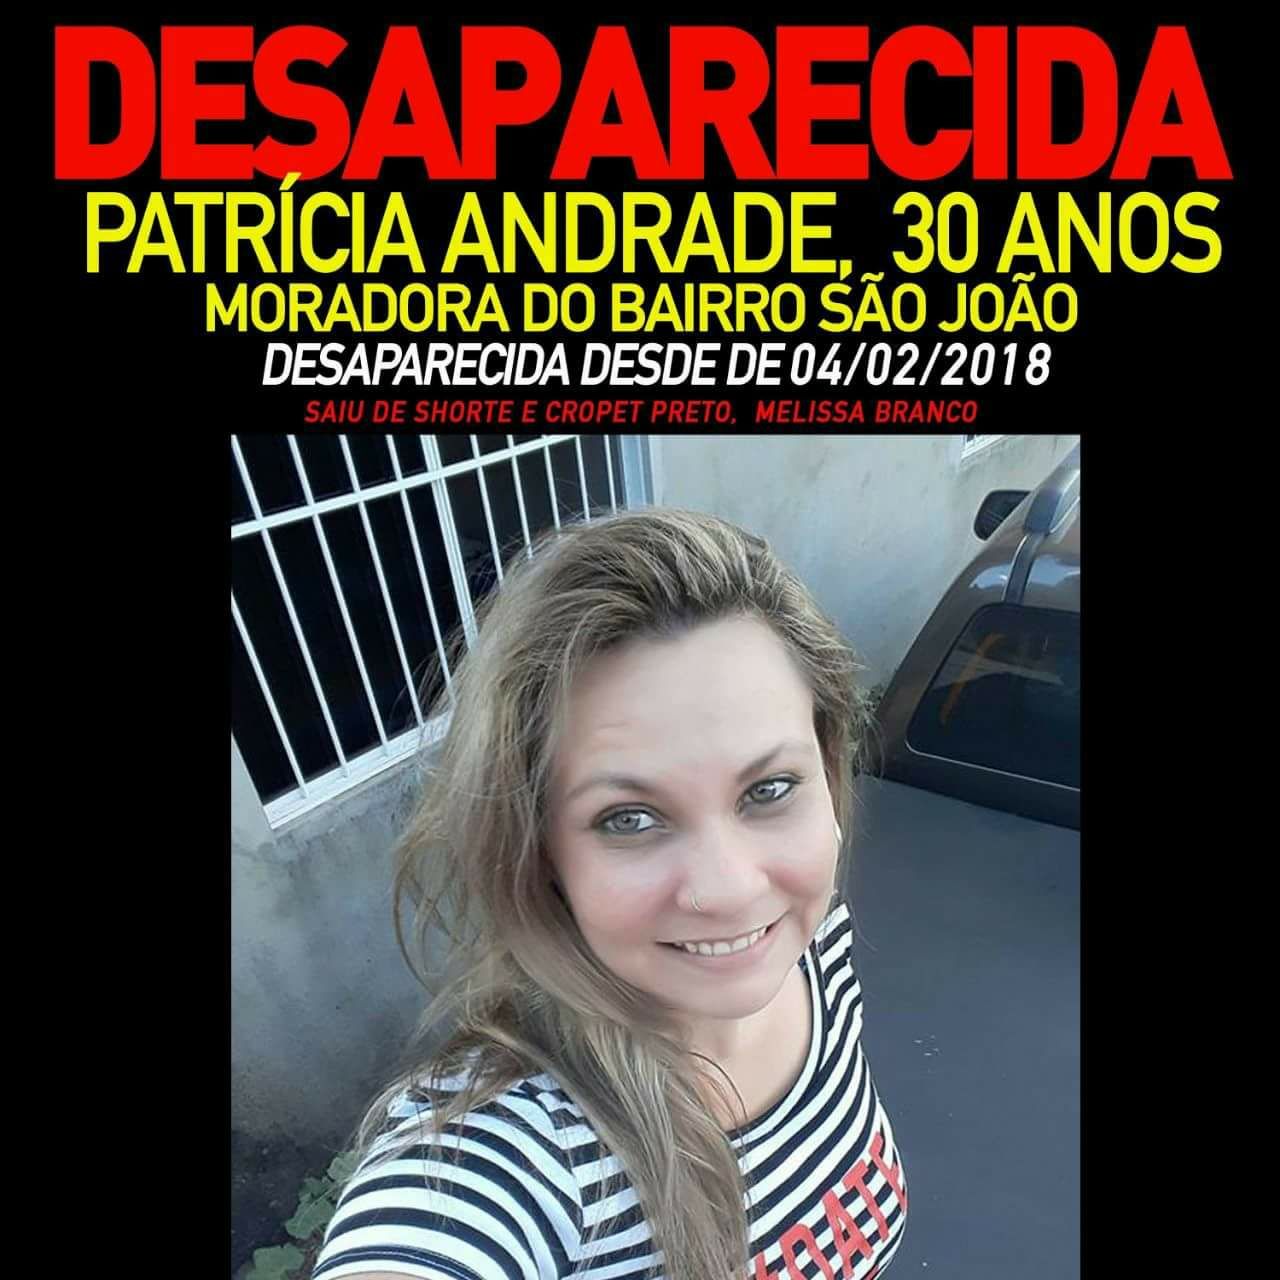 Patricia Andrade